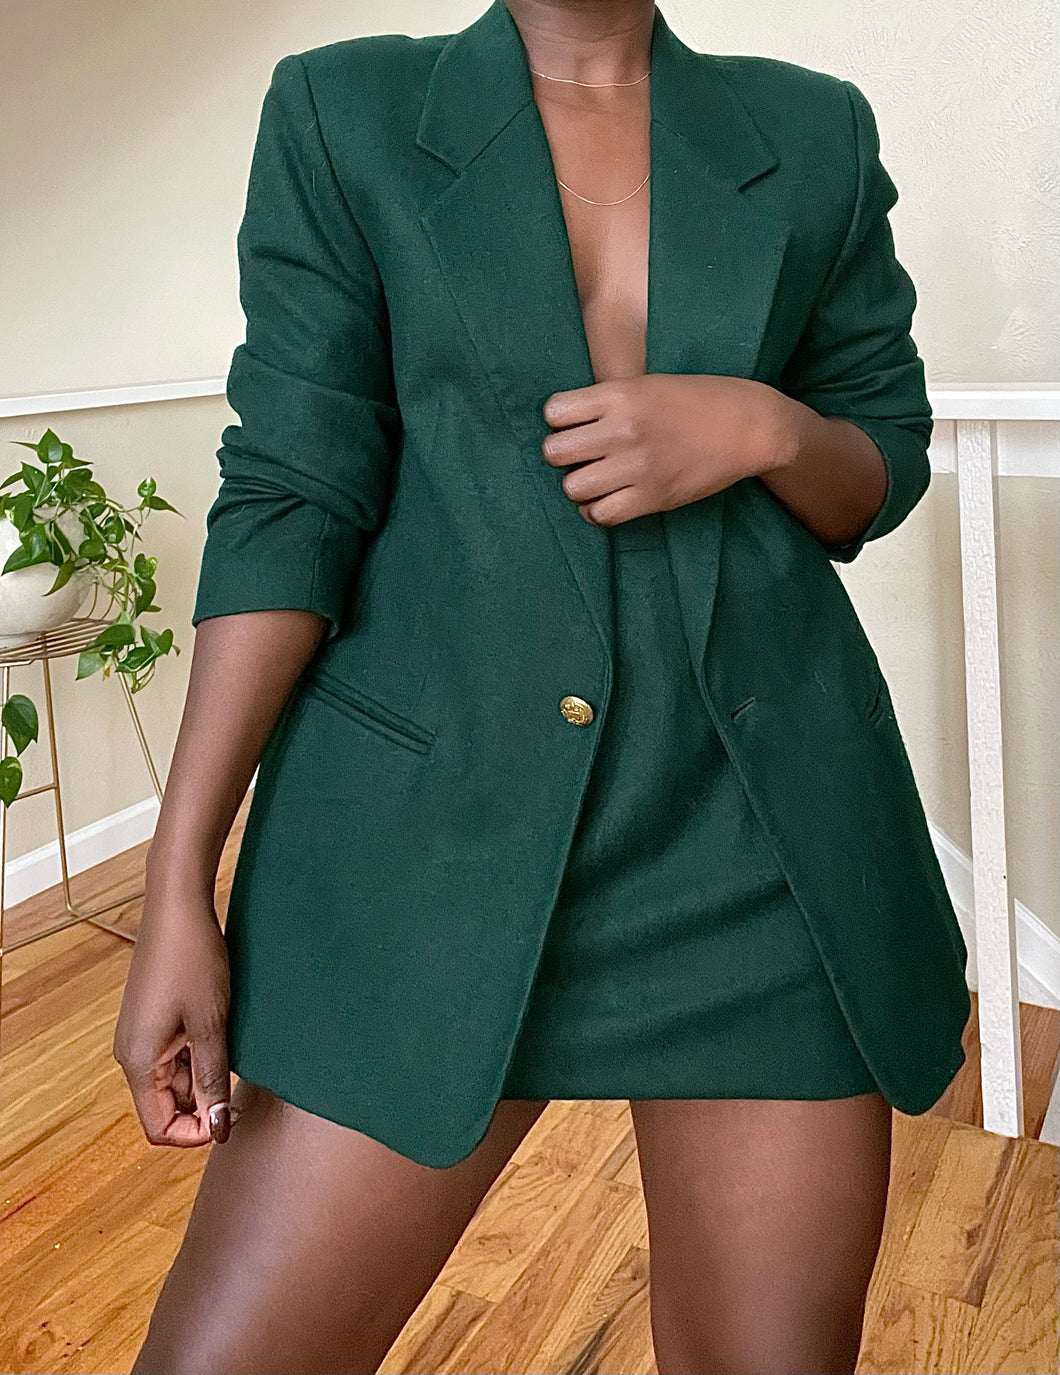 pine green skirt suit